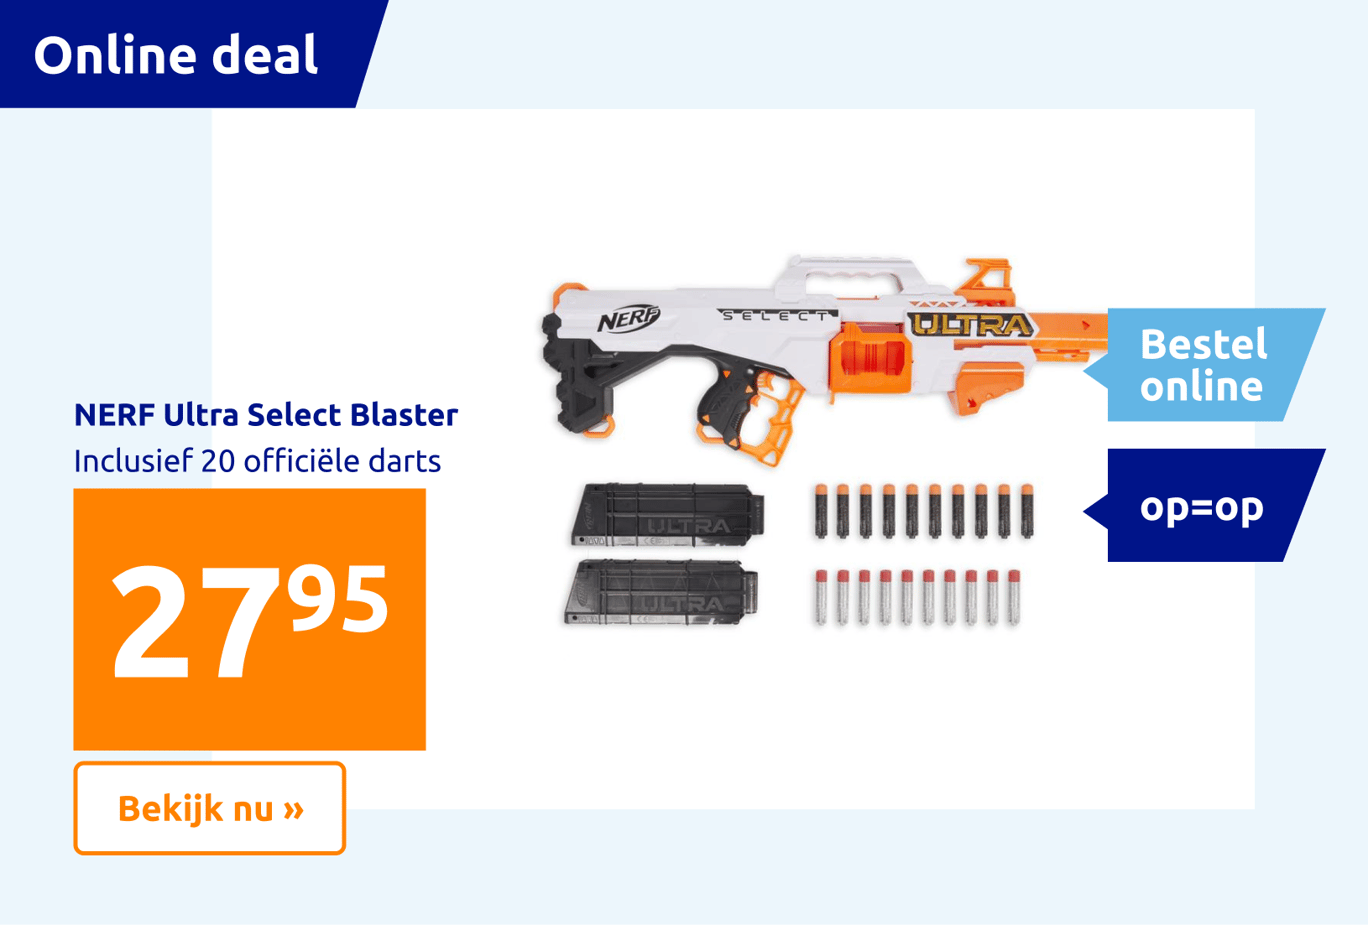 https://shop.action.com/nl-nl/p/5010993855285/nerf-ultra-select-blaster